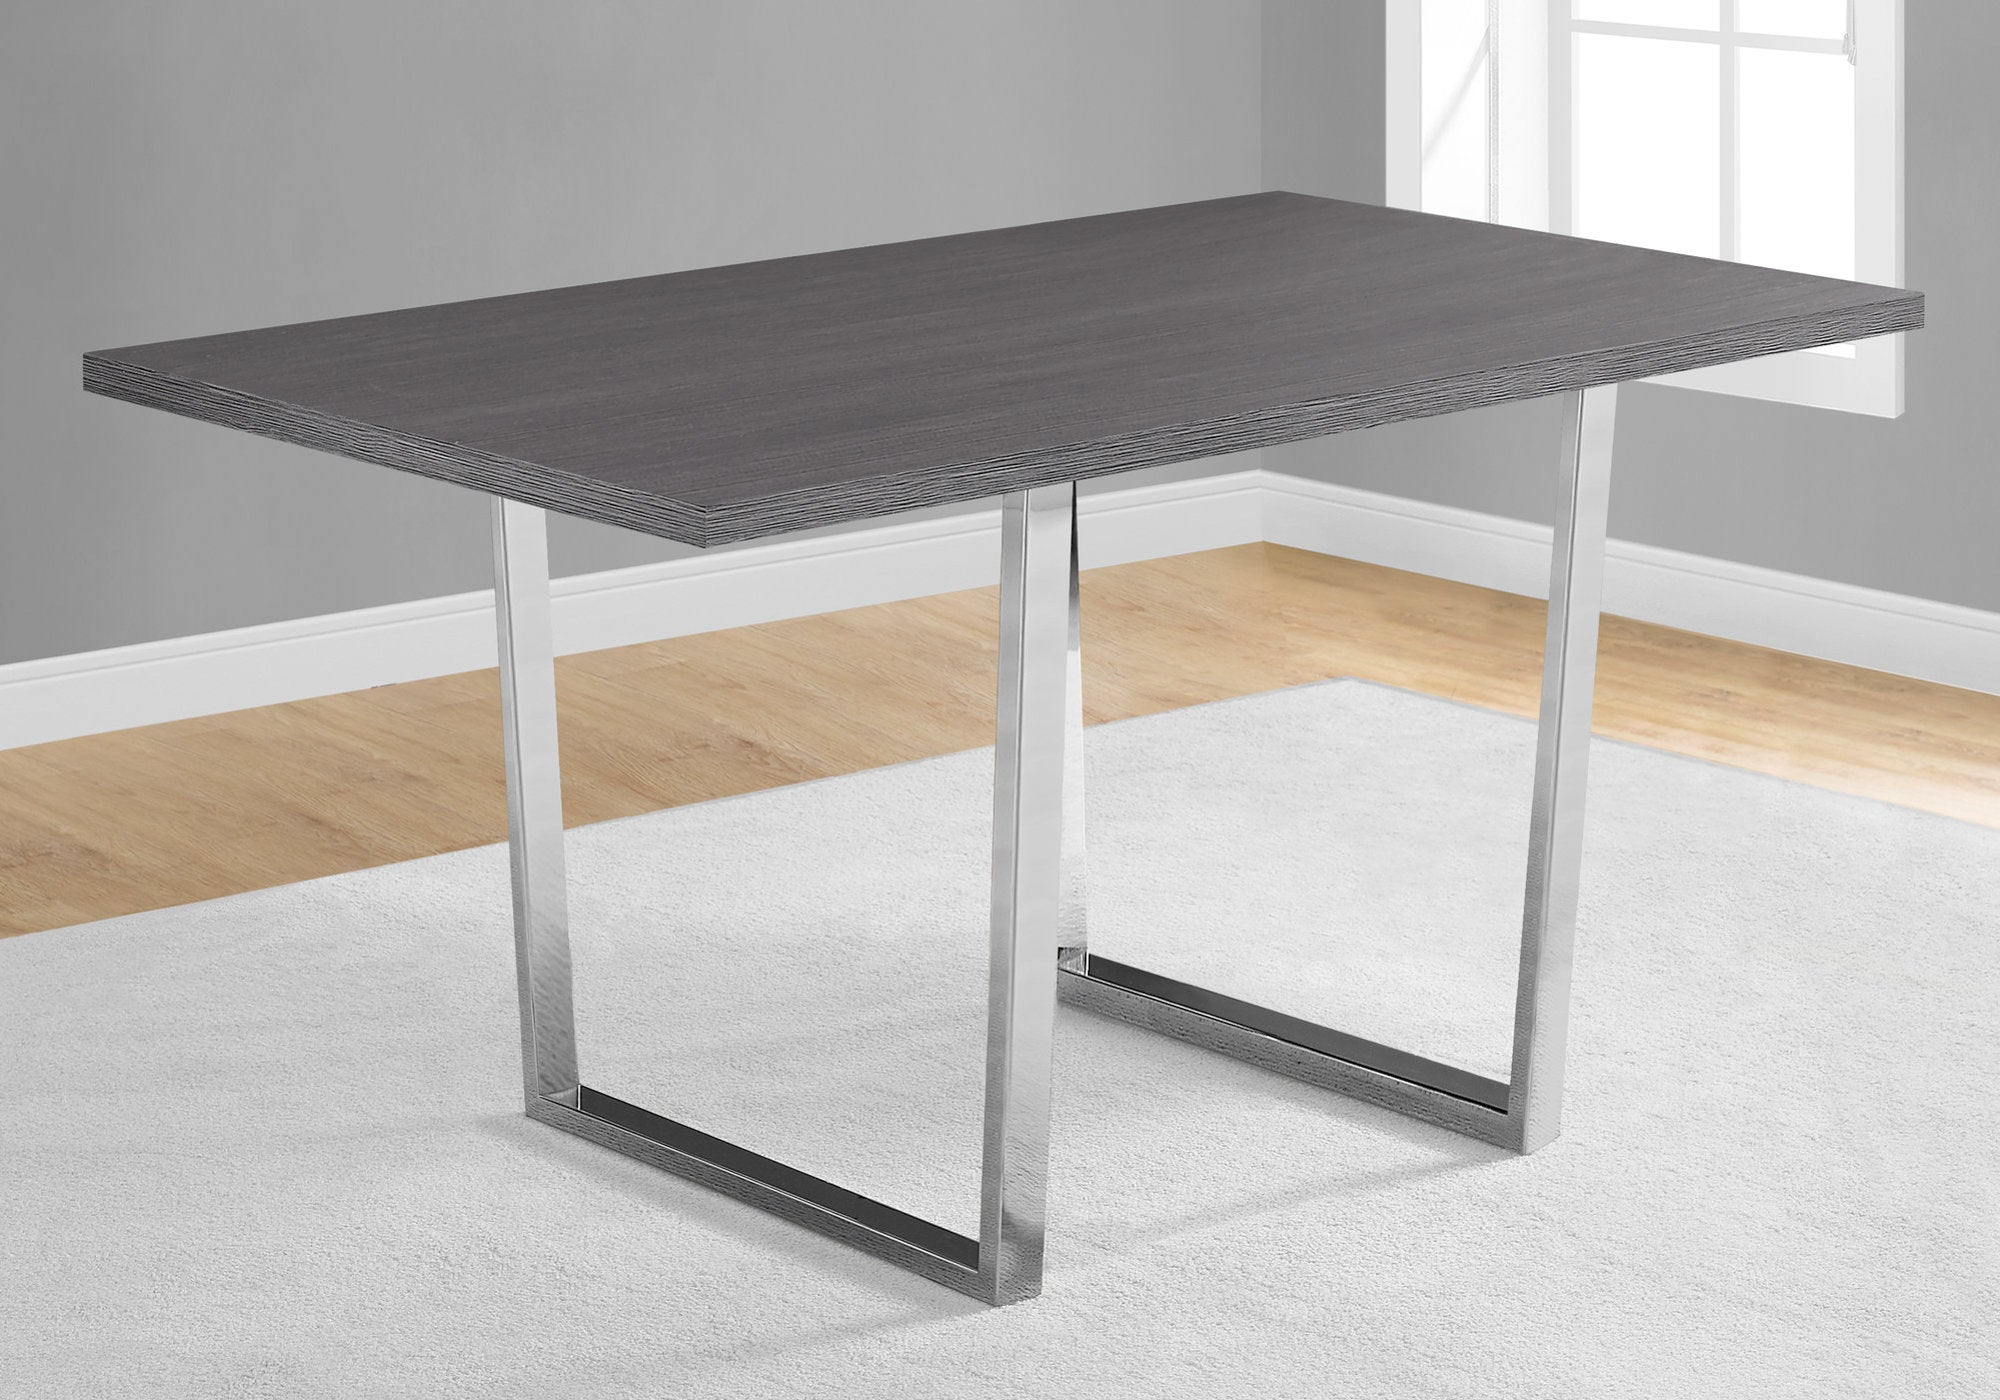 MN-601120    Dining Table, 60" Rectangular, Metal, Kitchen, Dining Room, Metal Legs, Laminate, Grey, Chrome, Contemporary, Modern